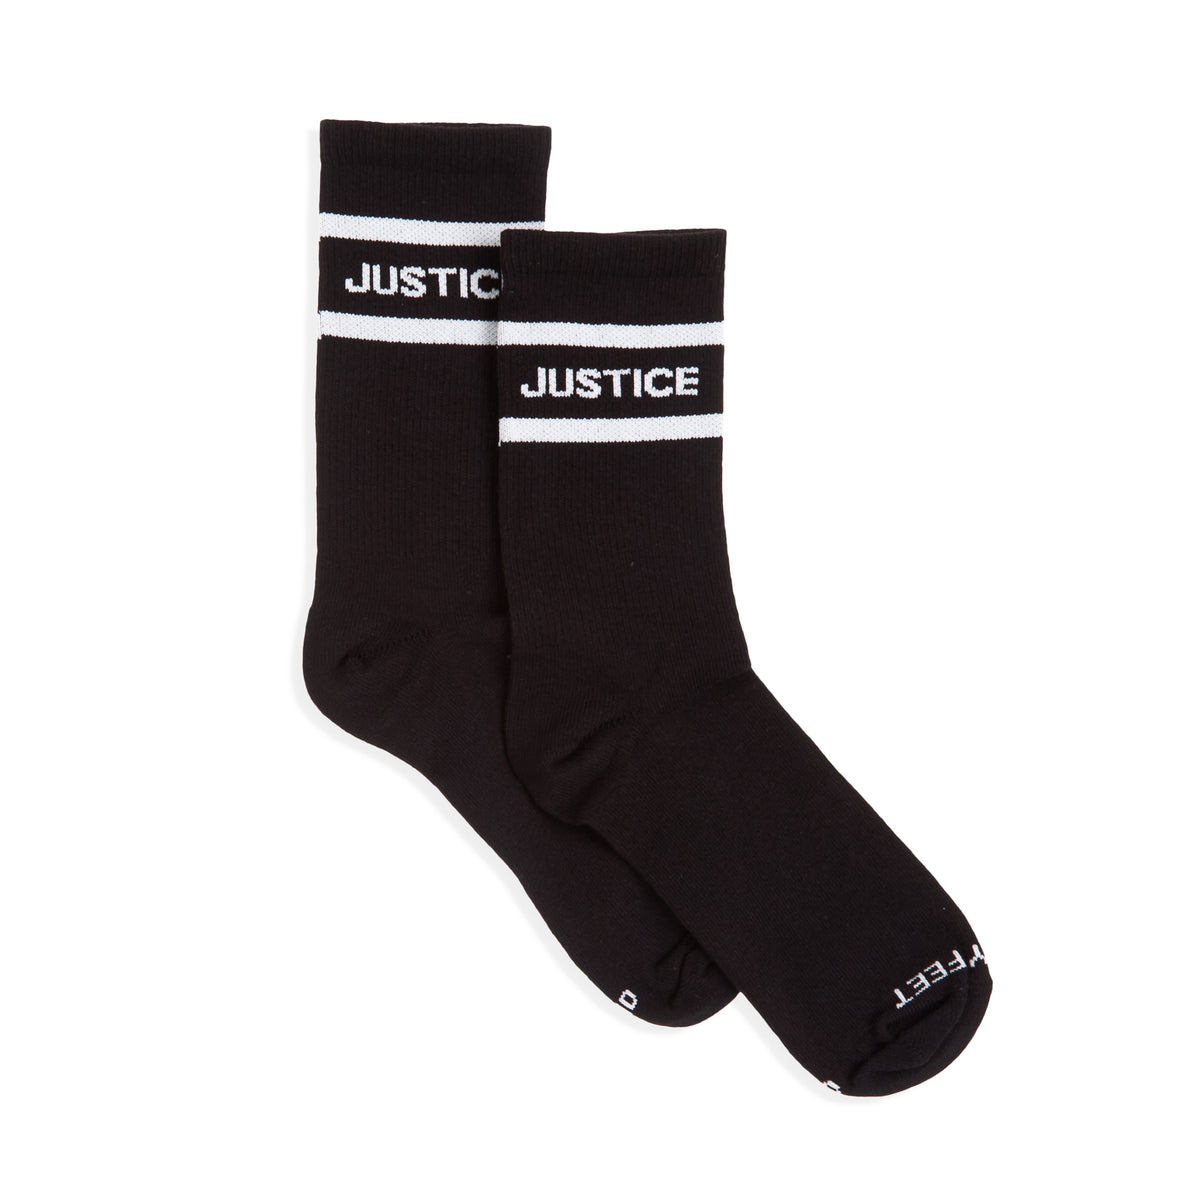 Justice Socks